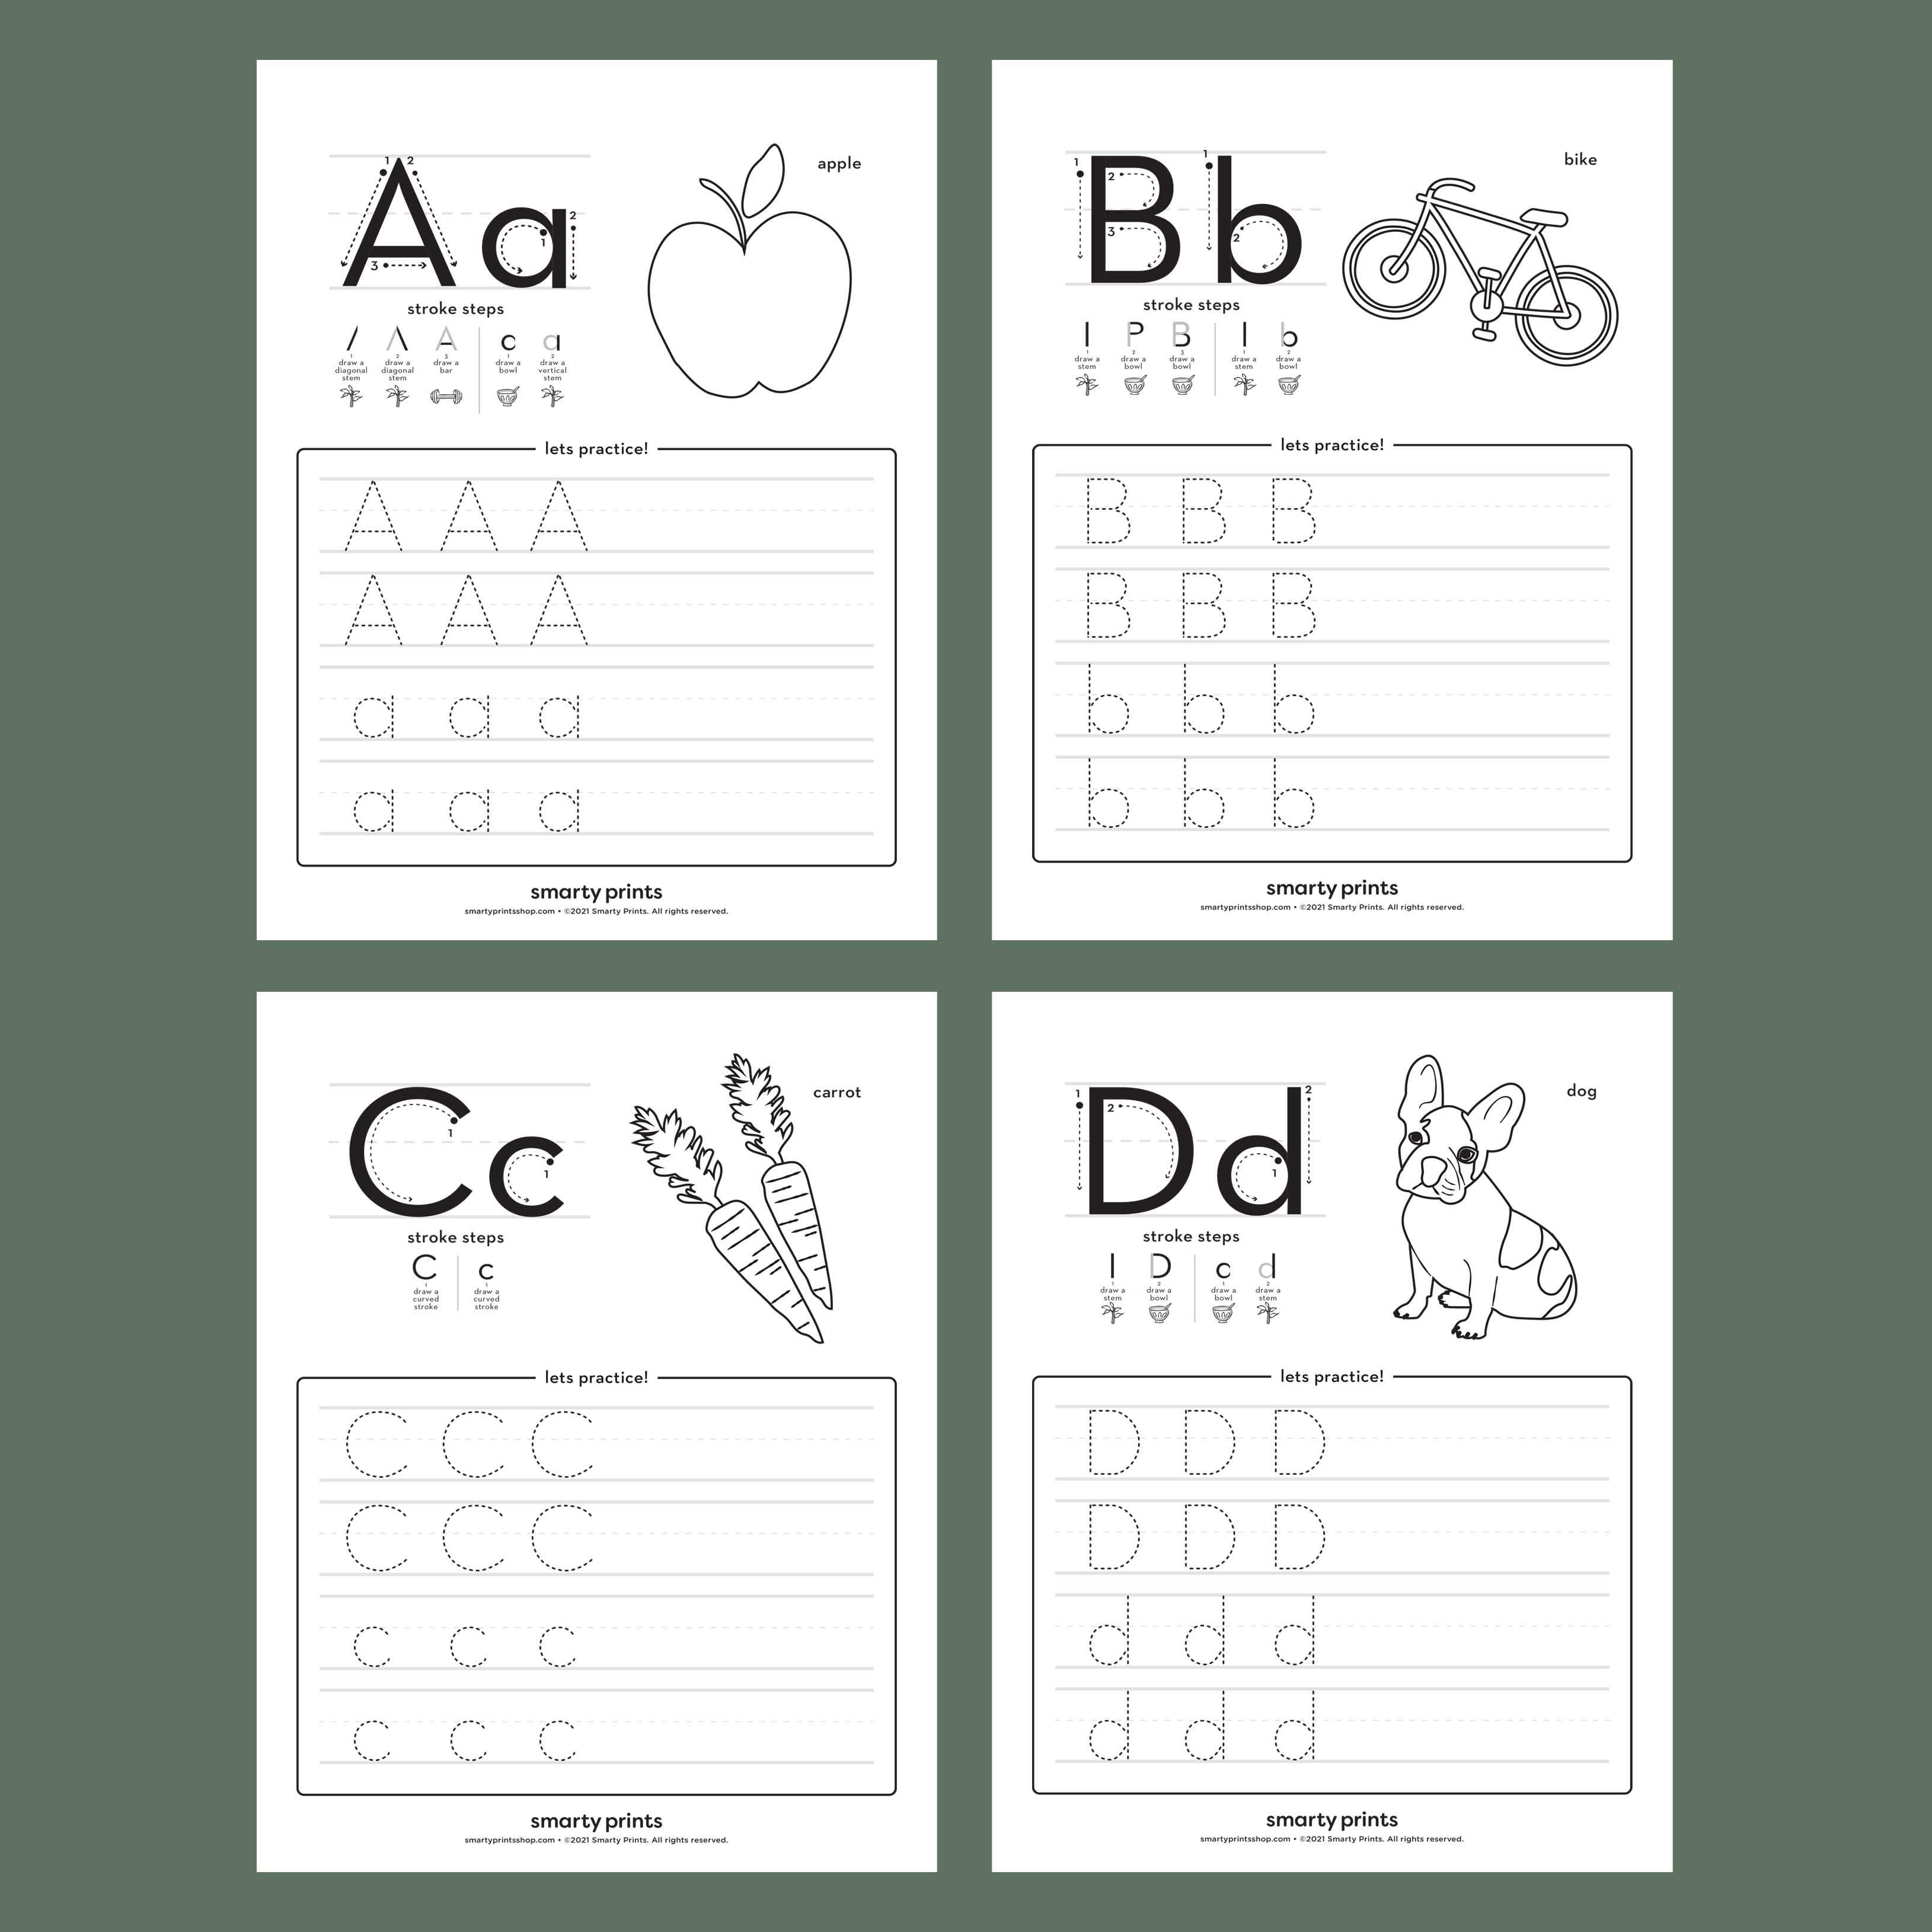 Letters / Letter Worksheets  Writing practice, Kindergarten